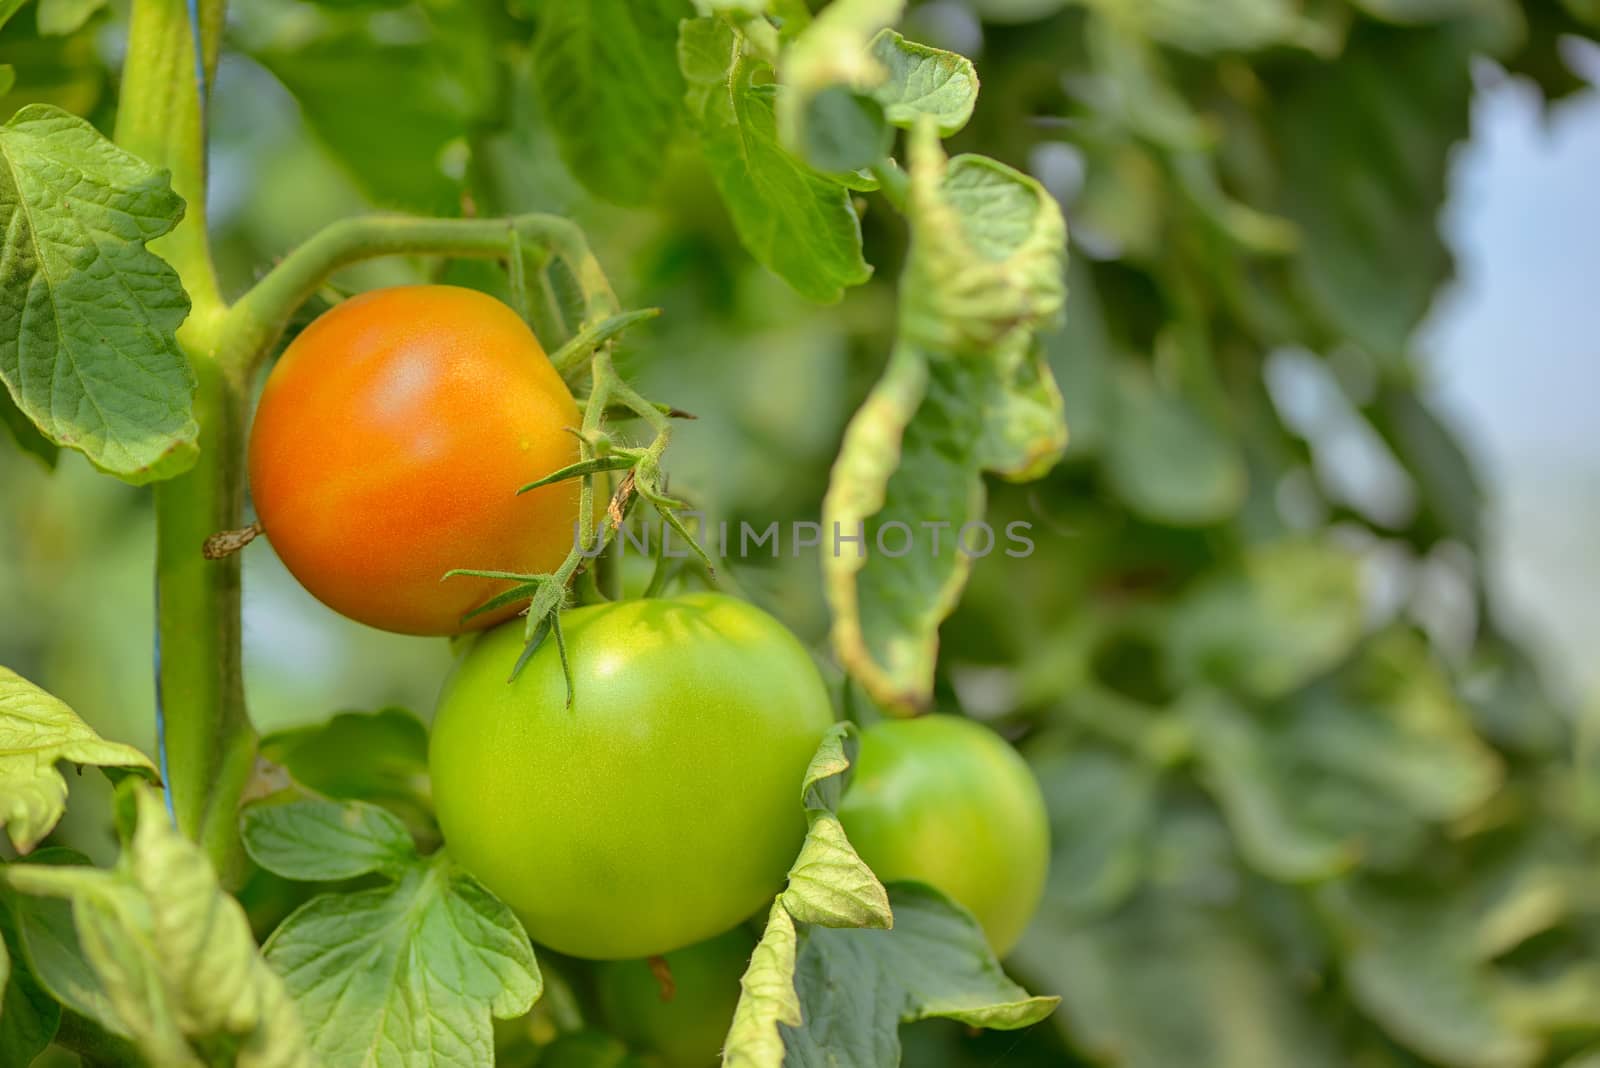 Unripe tomatoes in greenhouse by jordachelr